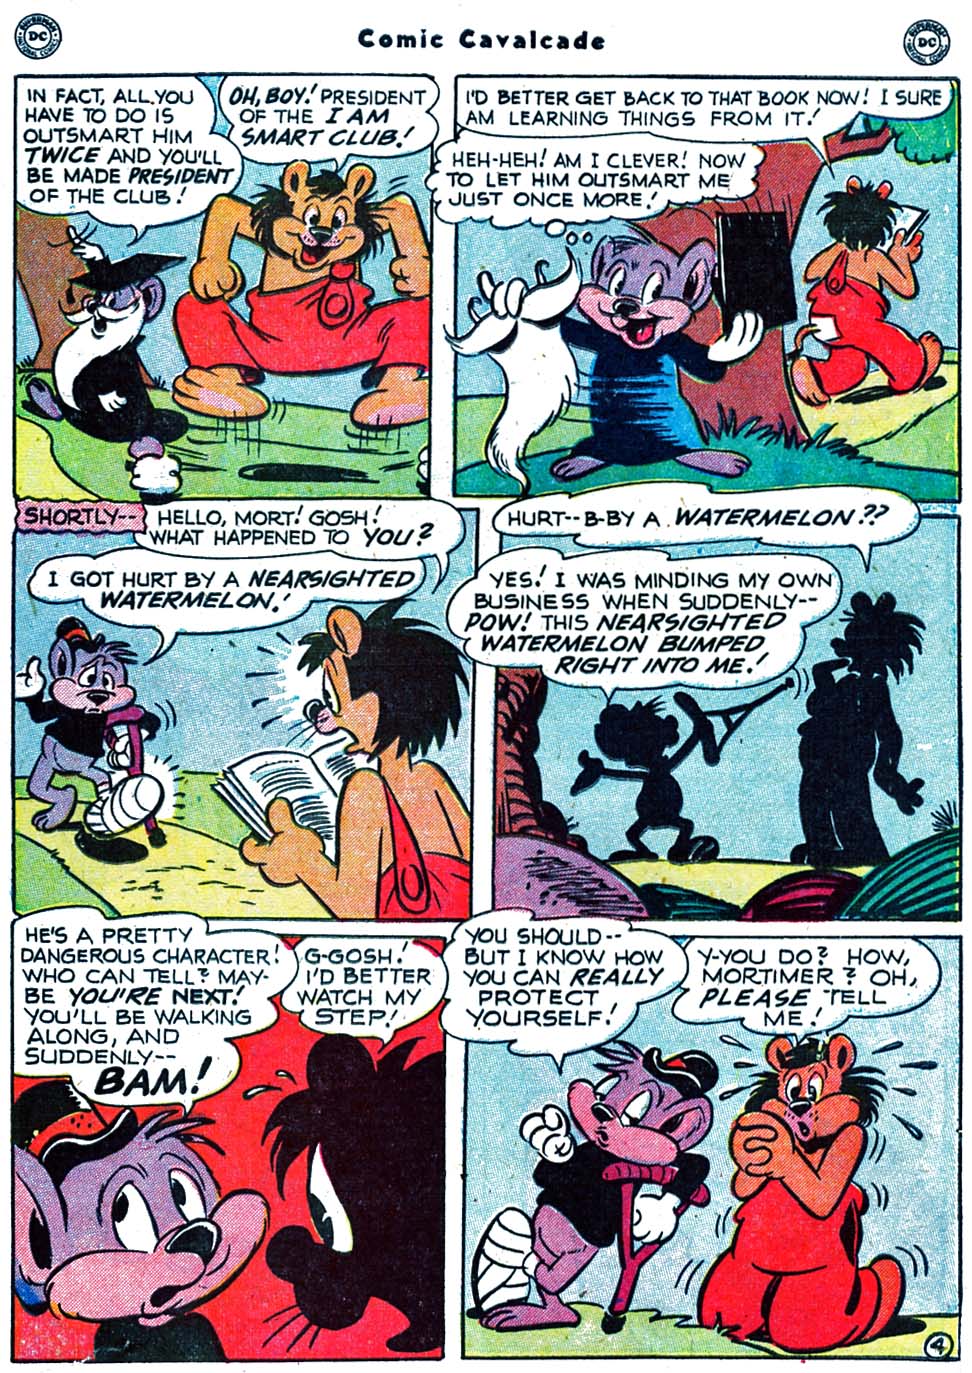 Comic Cavalcade issue 39 - Page 45